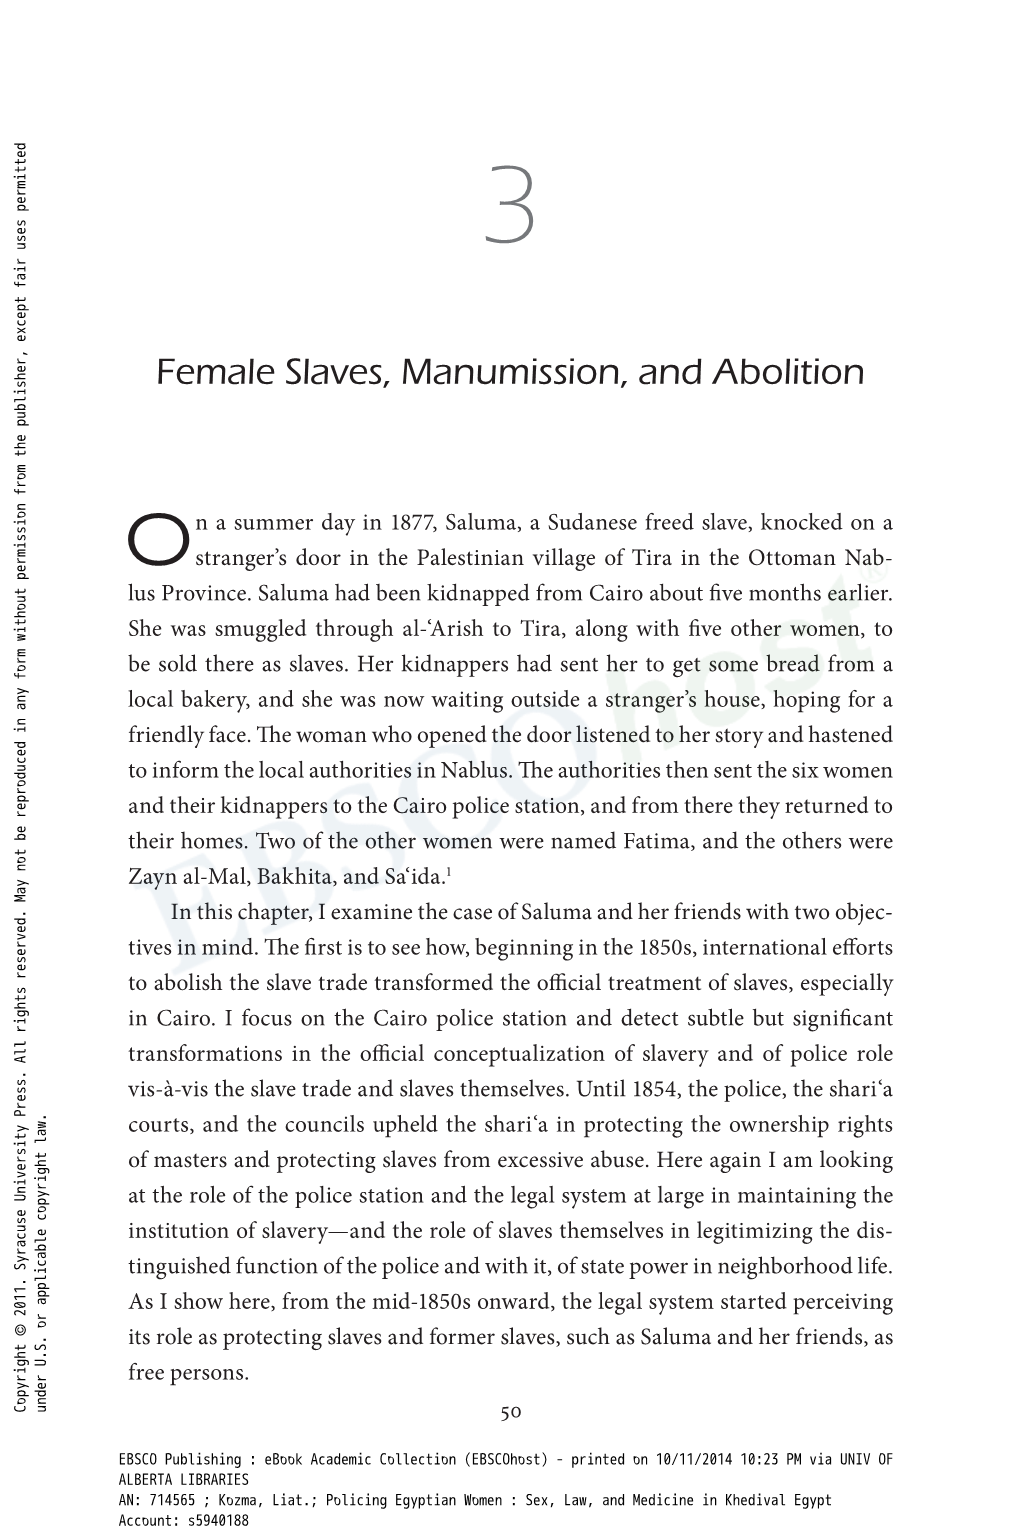 Female Slaves, Manumission, and Abolition